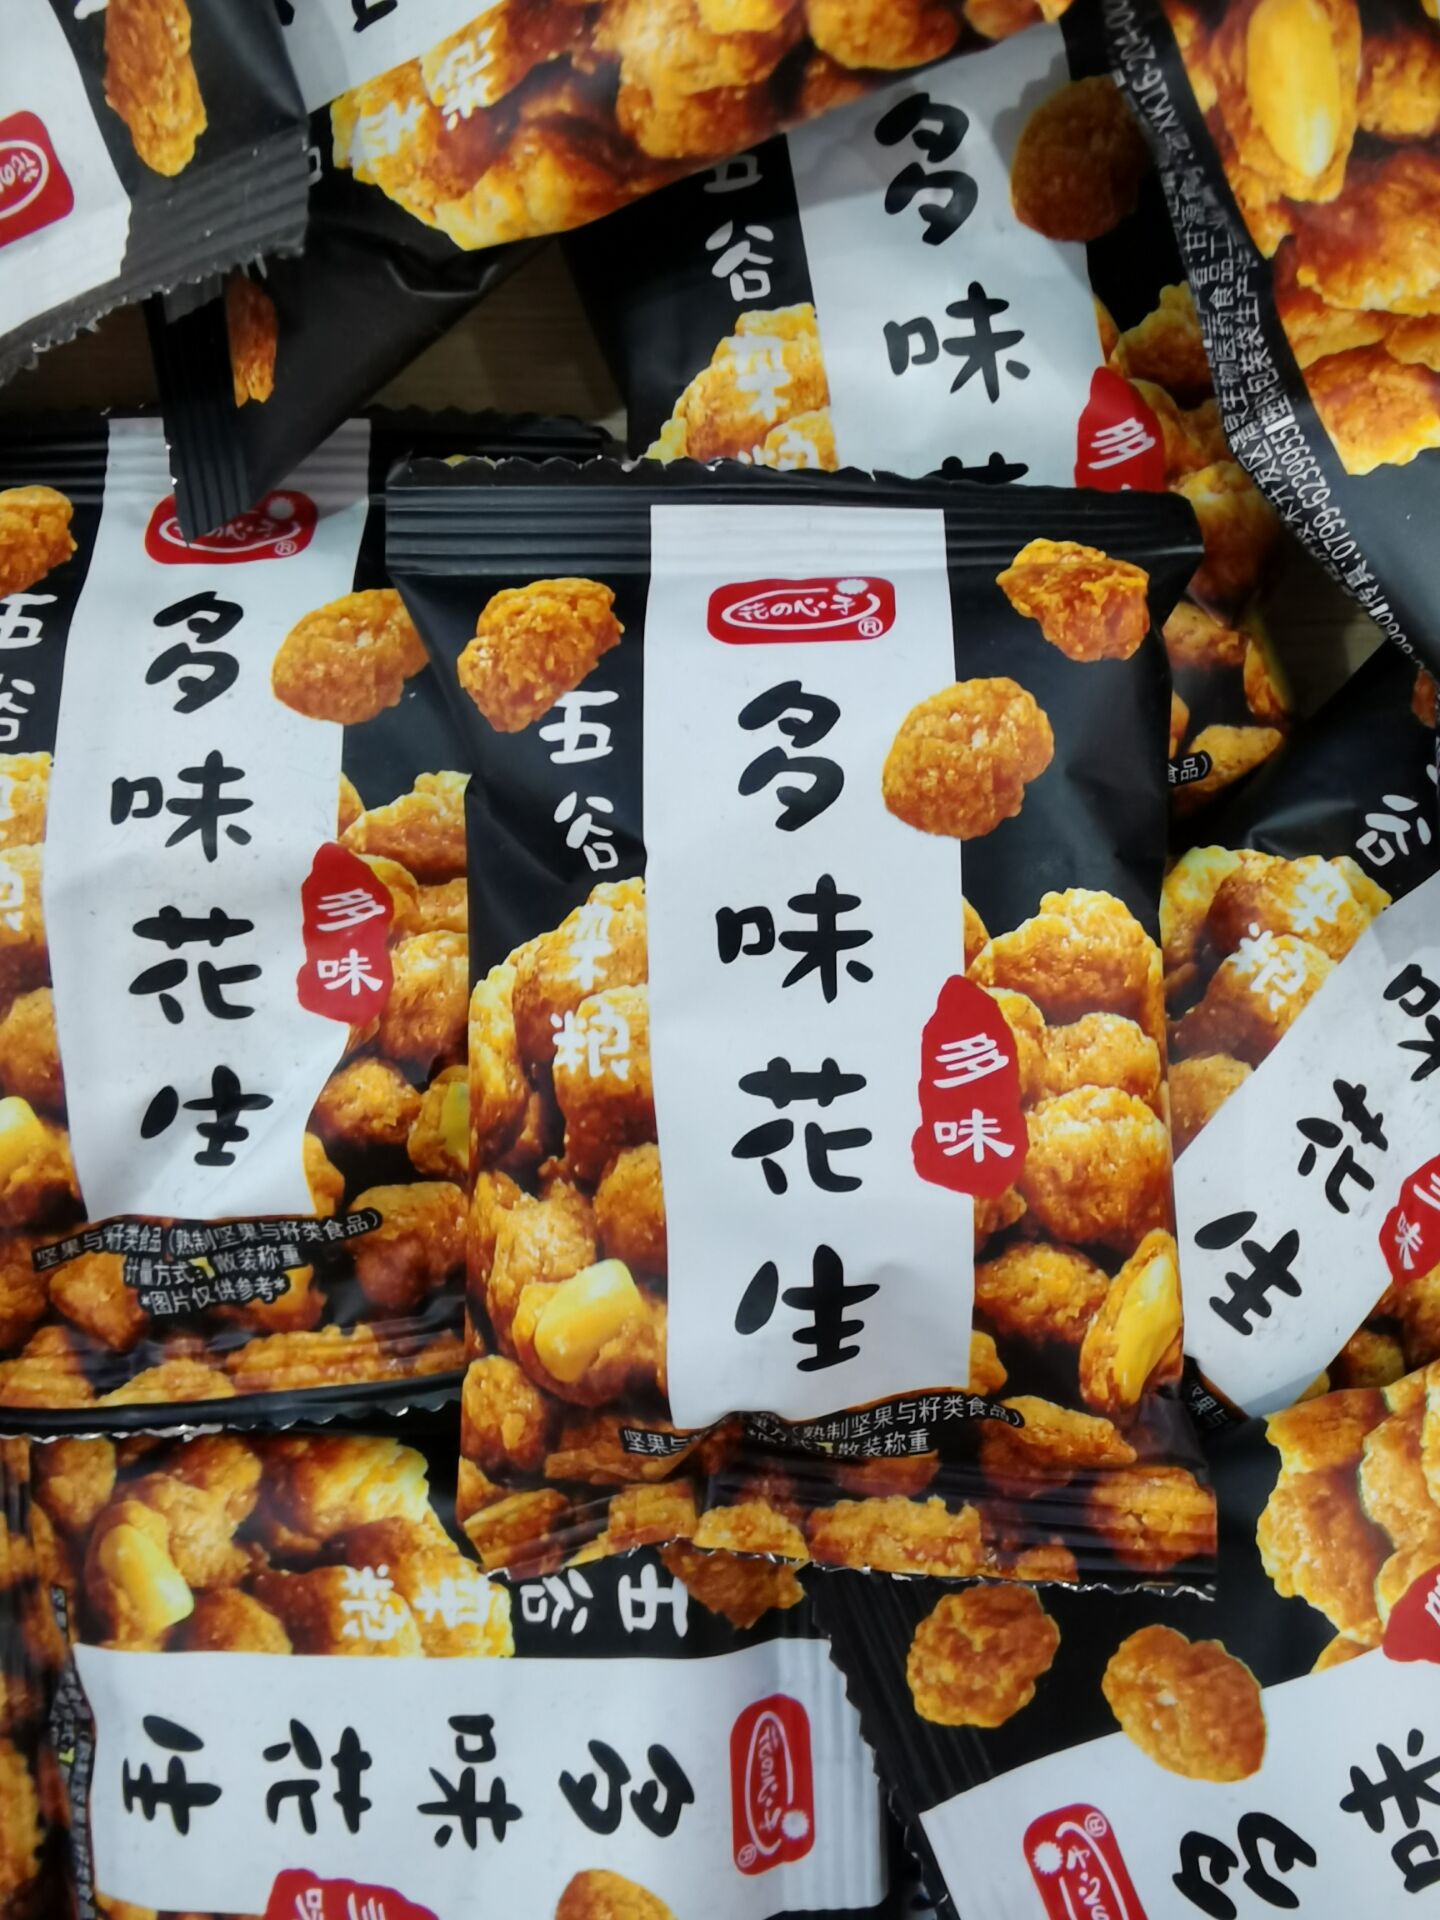 110other food:Multi-flavored peanuts